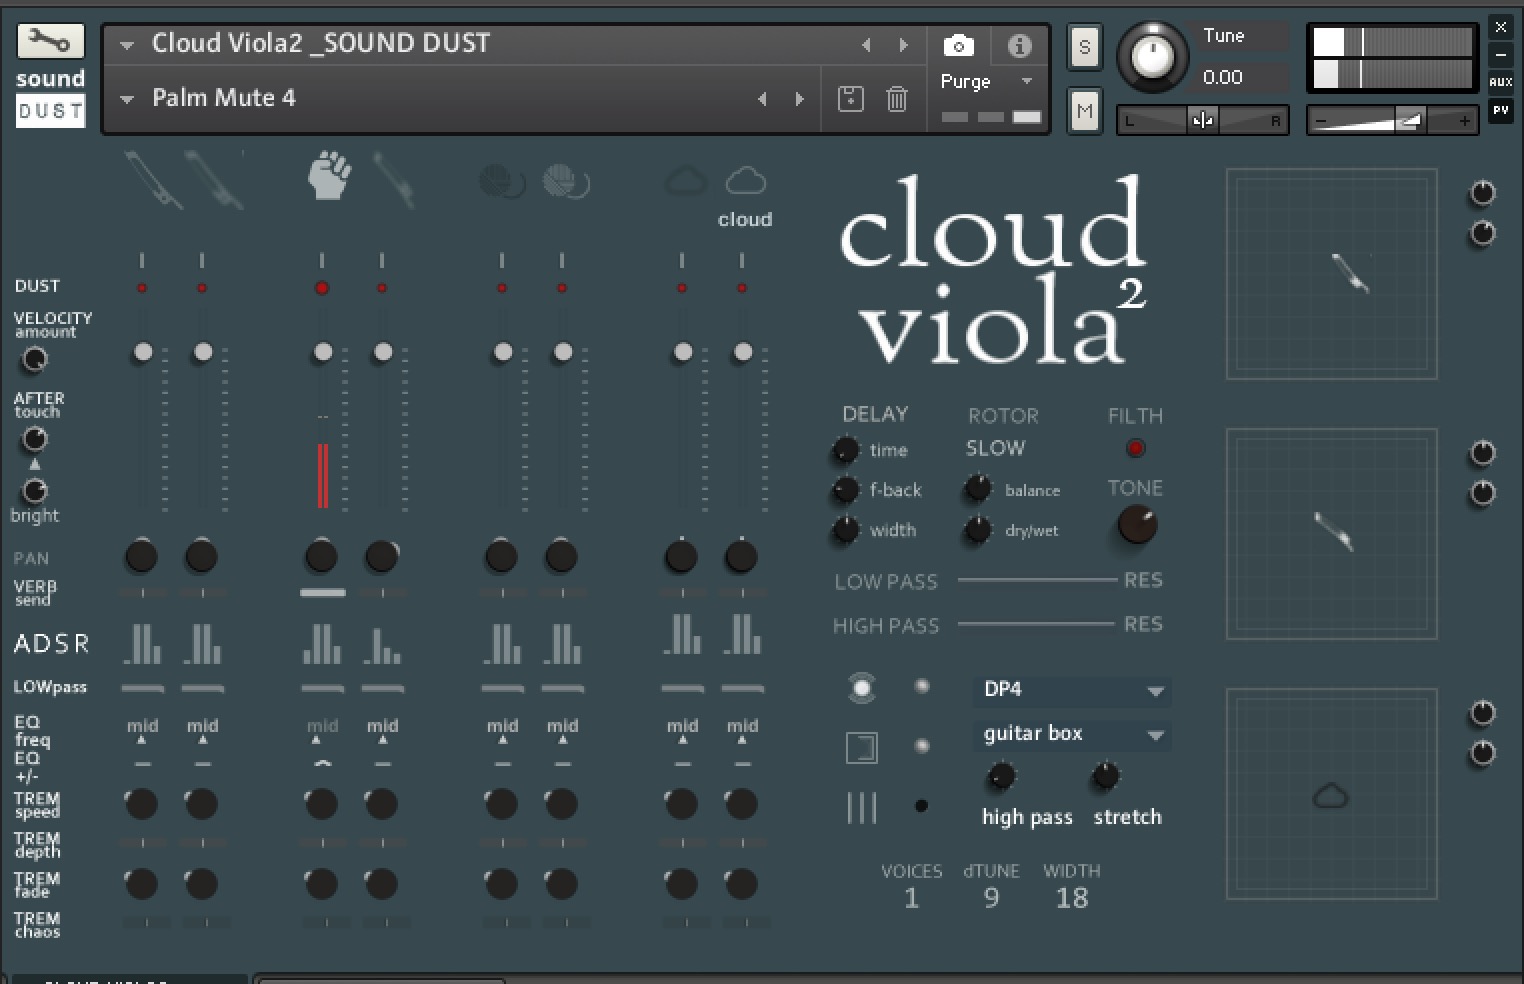 Cloud Viola2 by Sound Dust Review